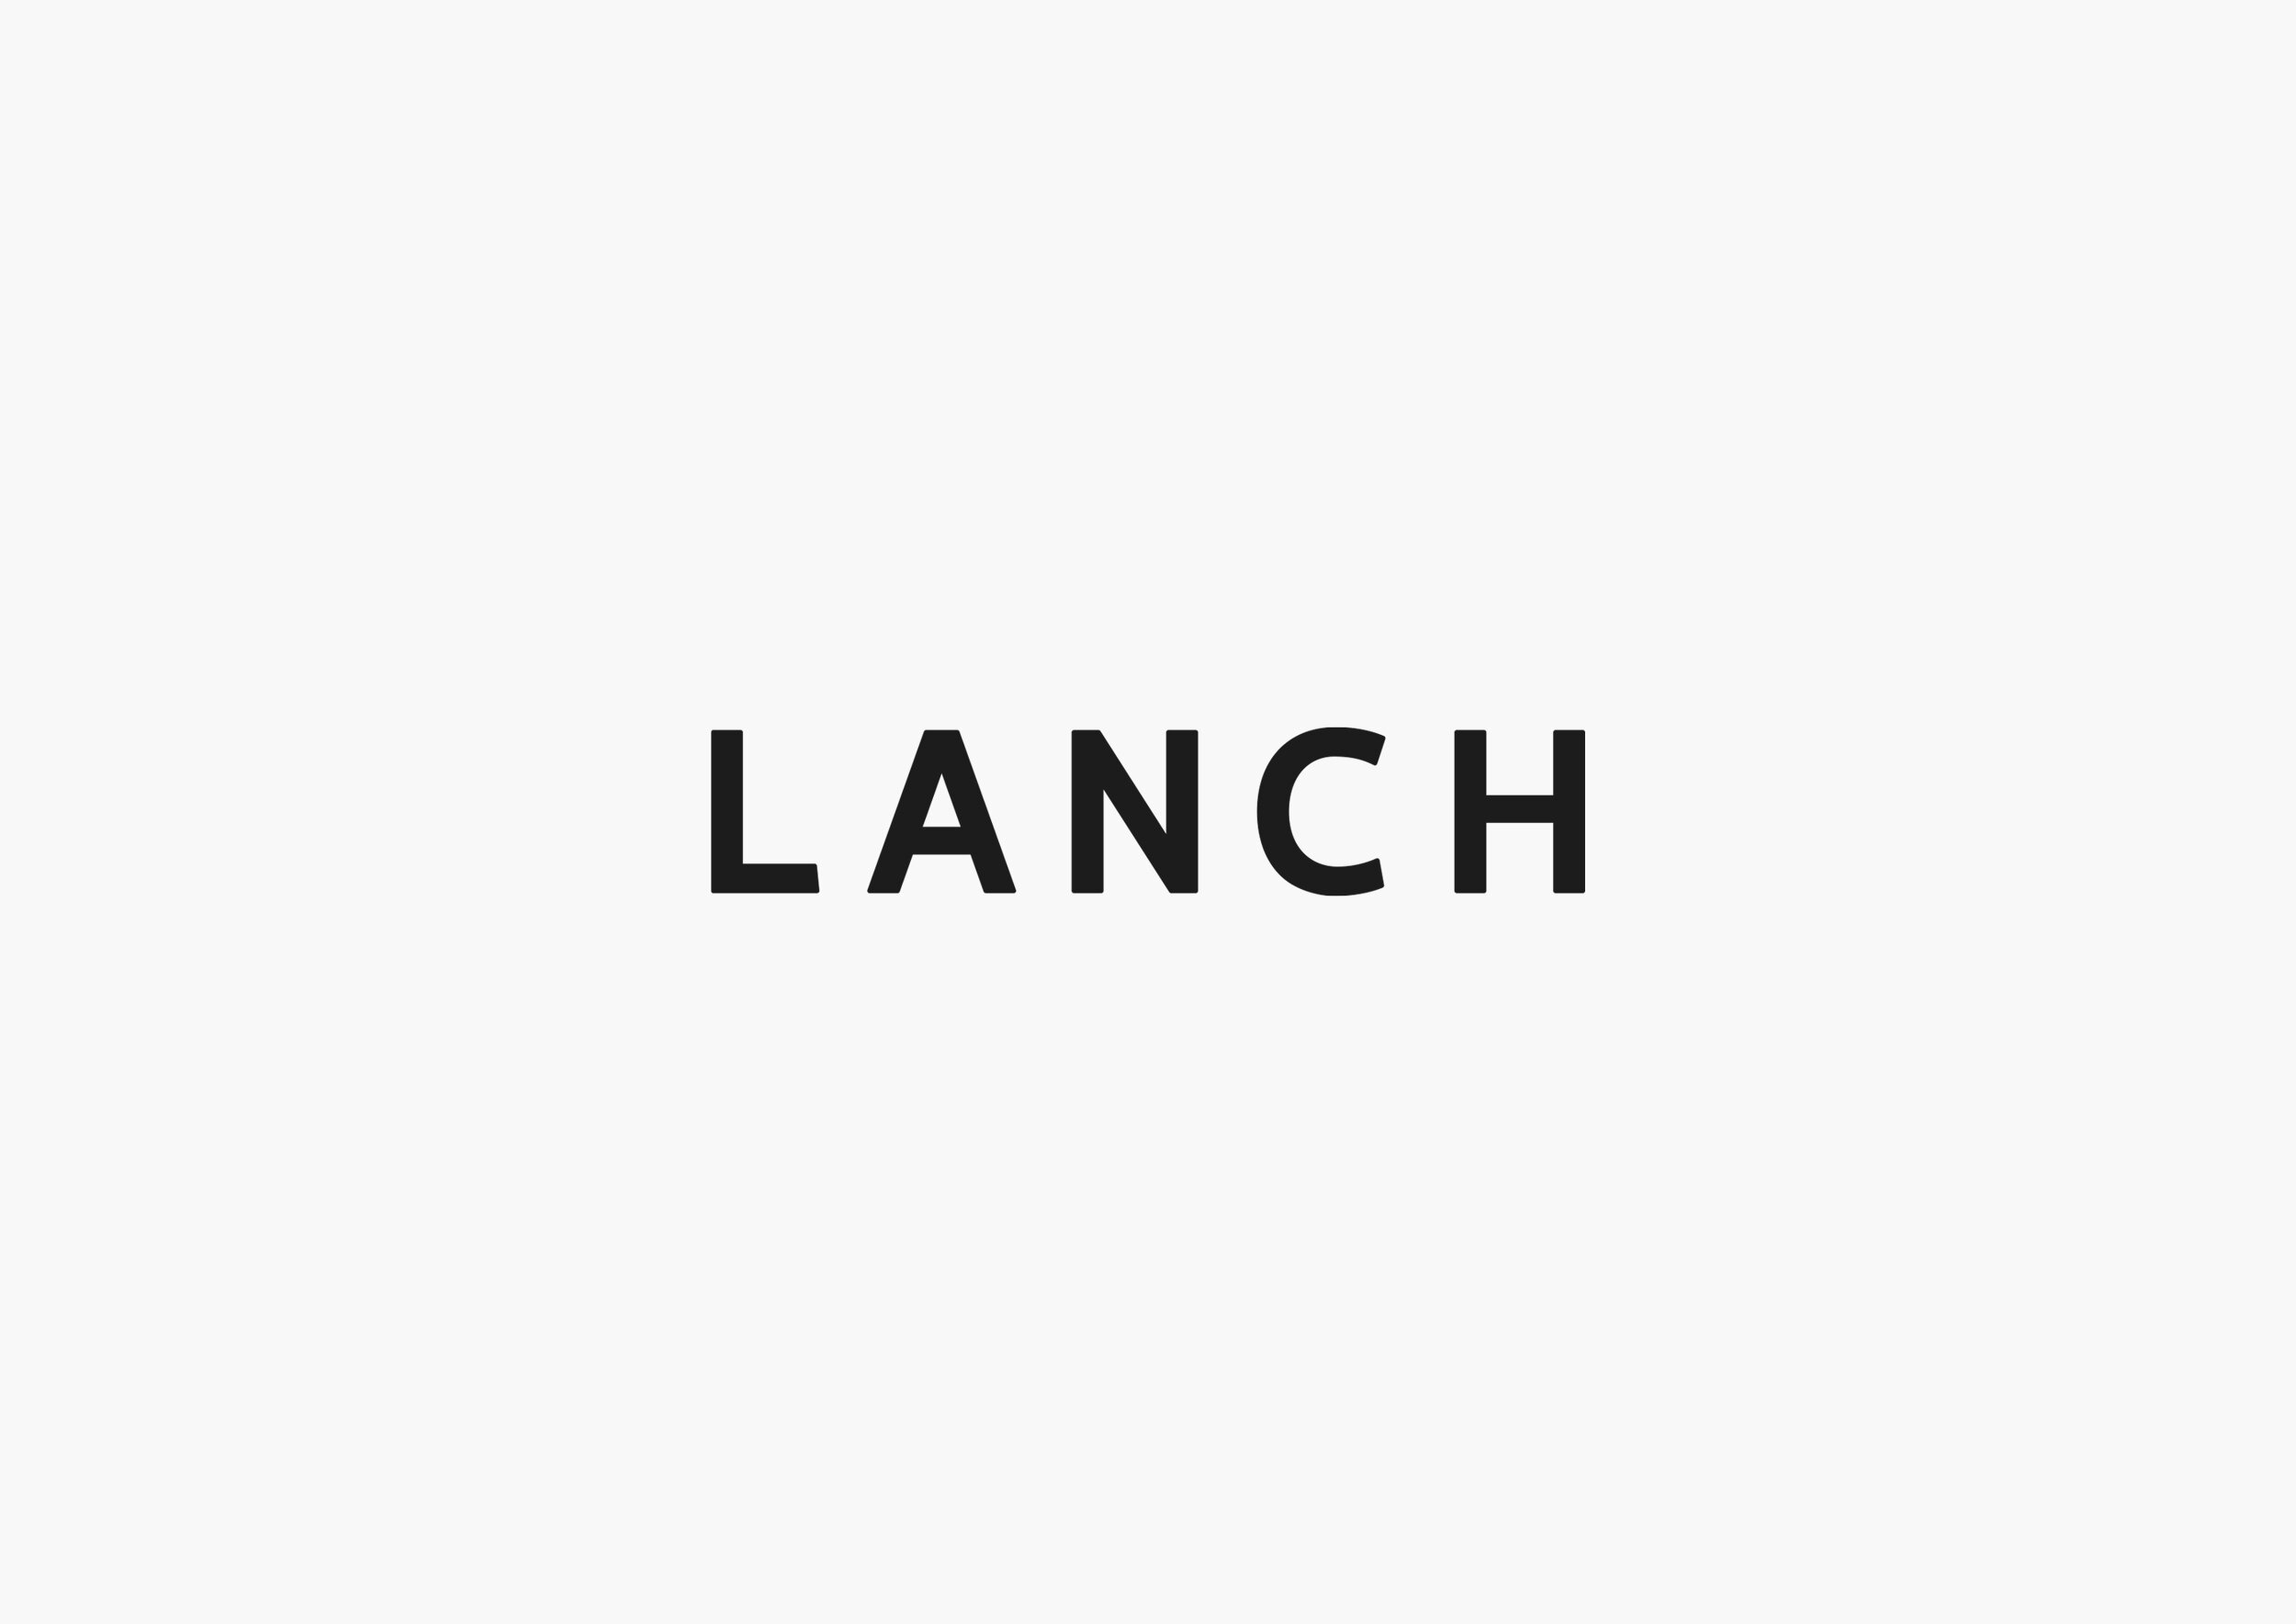 LANCH logo.jpg